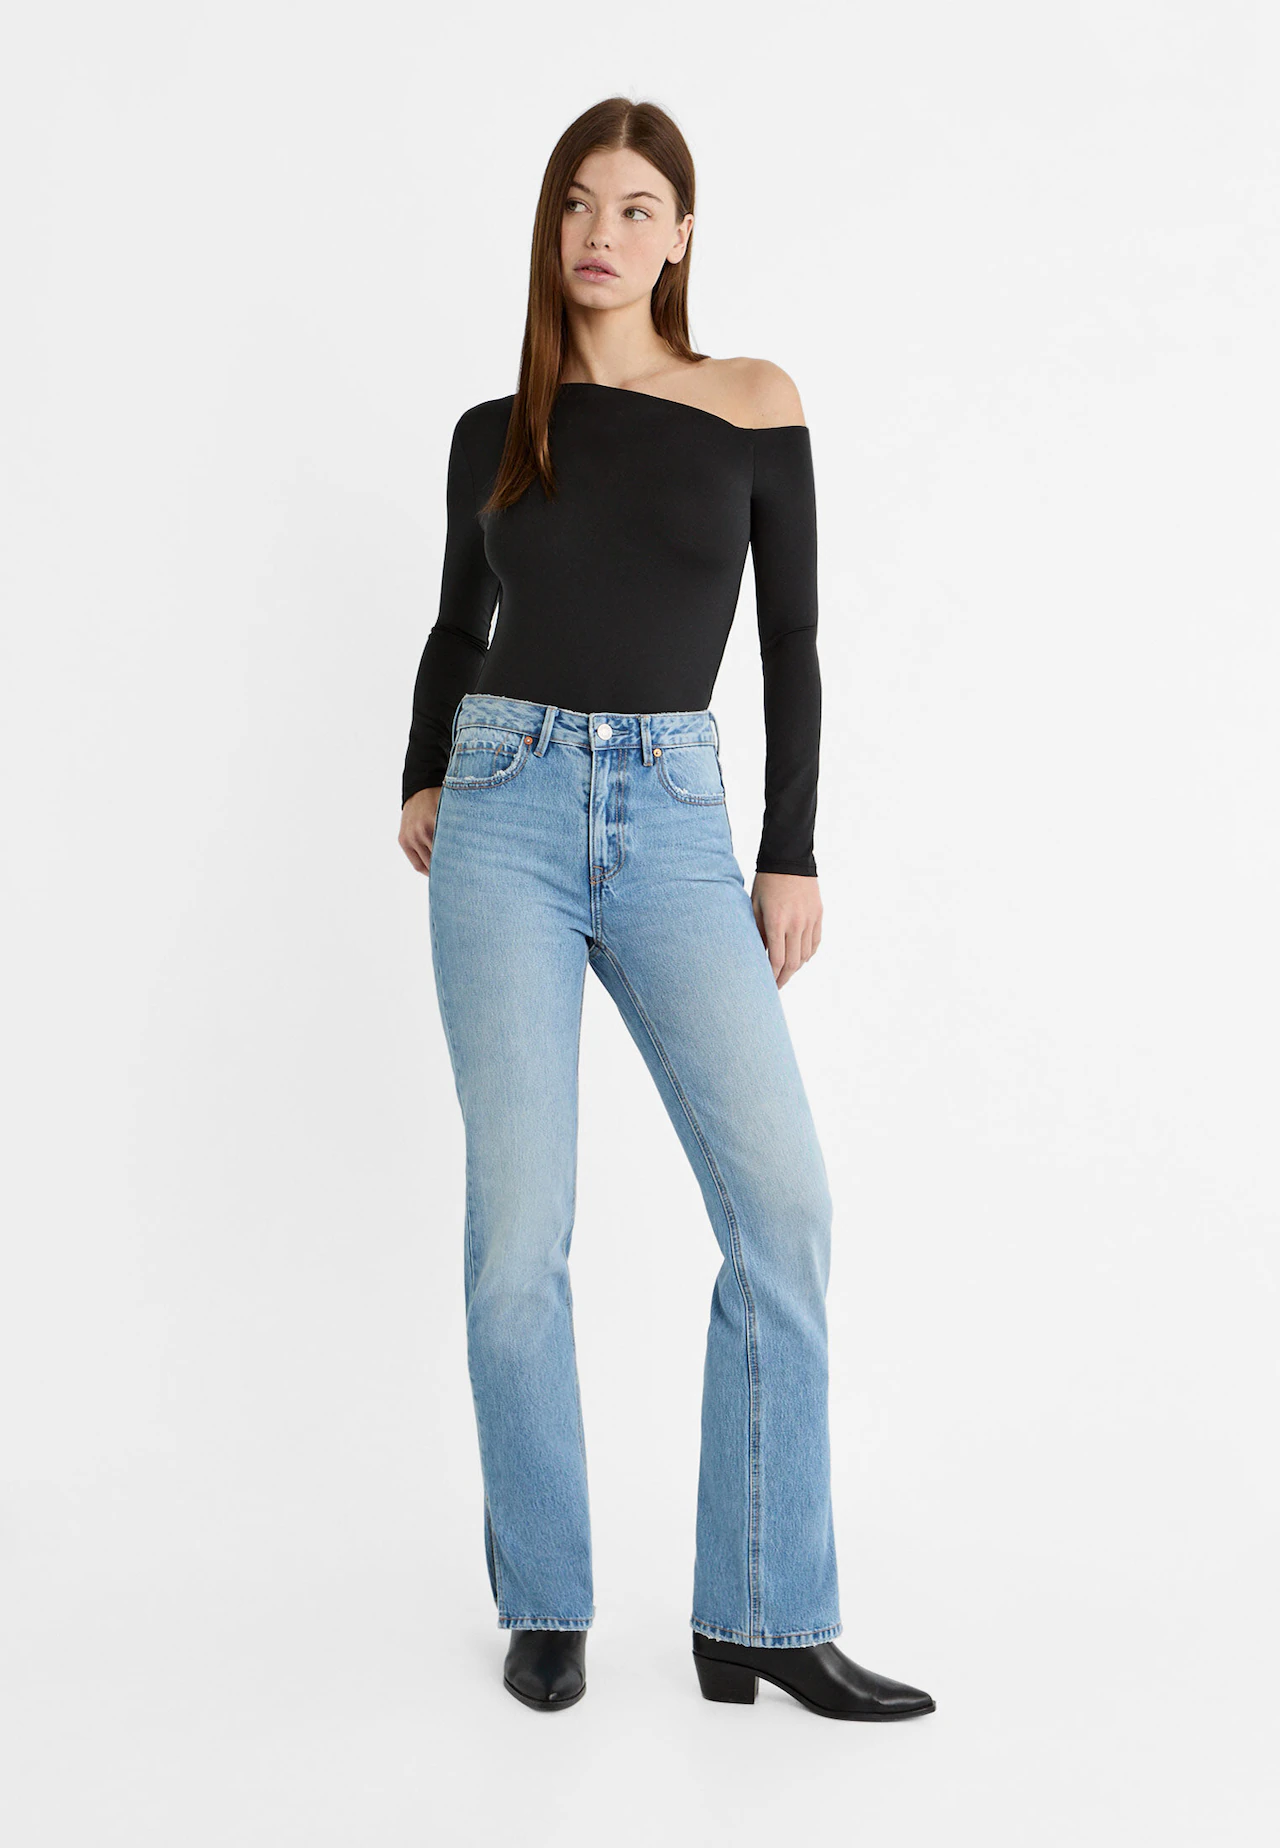 Straight-leg jeans with slit - Women's fashion